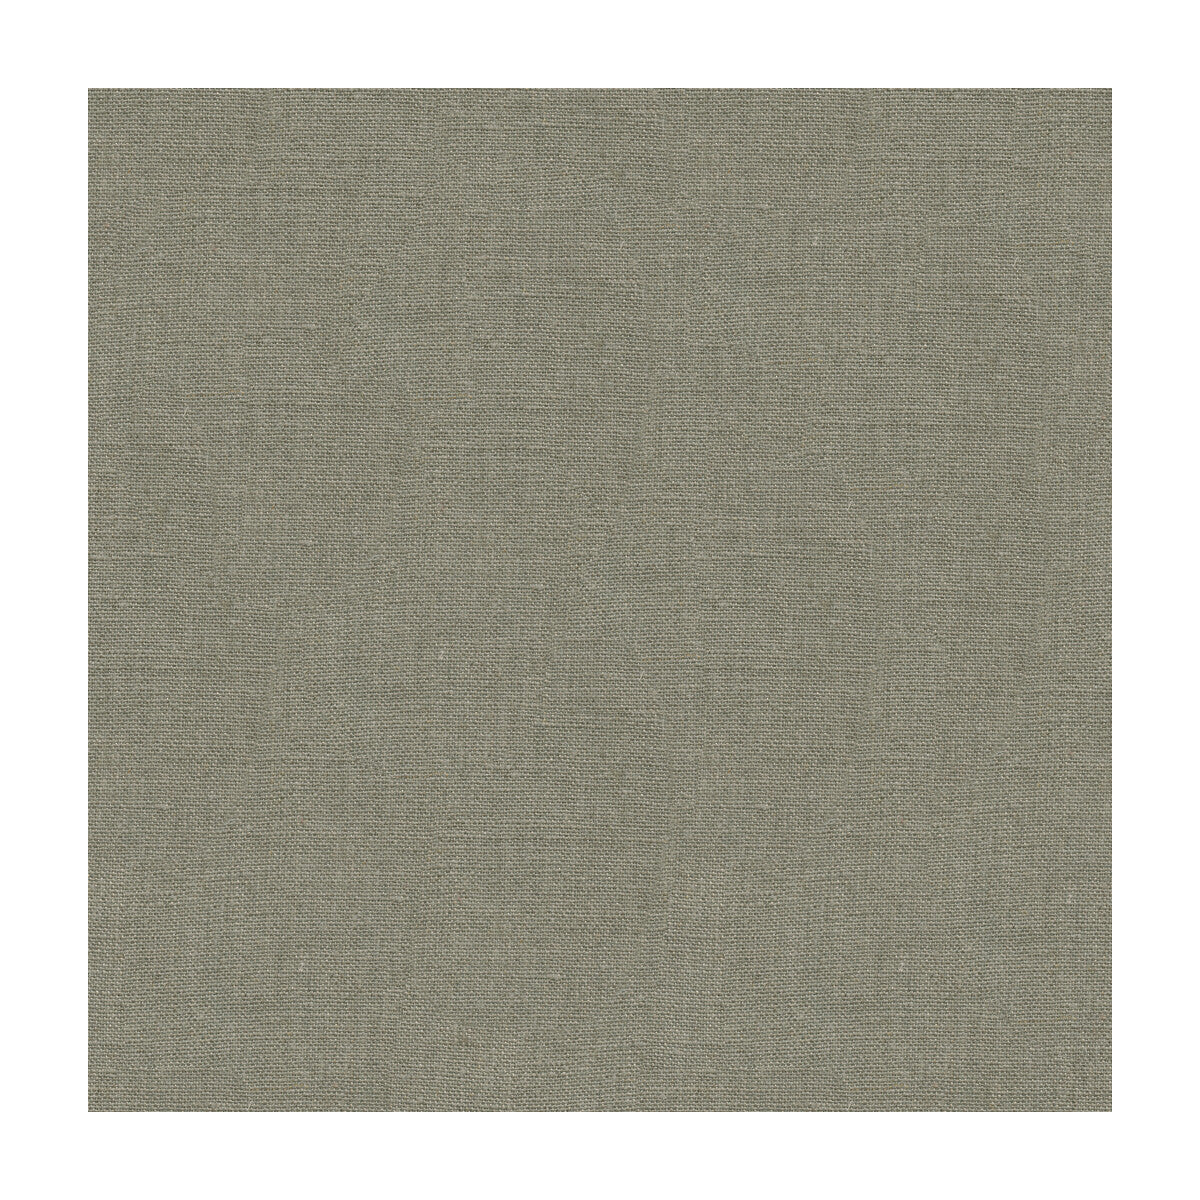 Dublin fabric in oatmeal color - pattern 32344.21.0 - by Kravet Basics